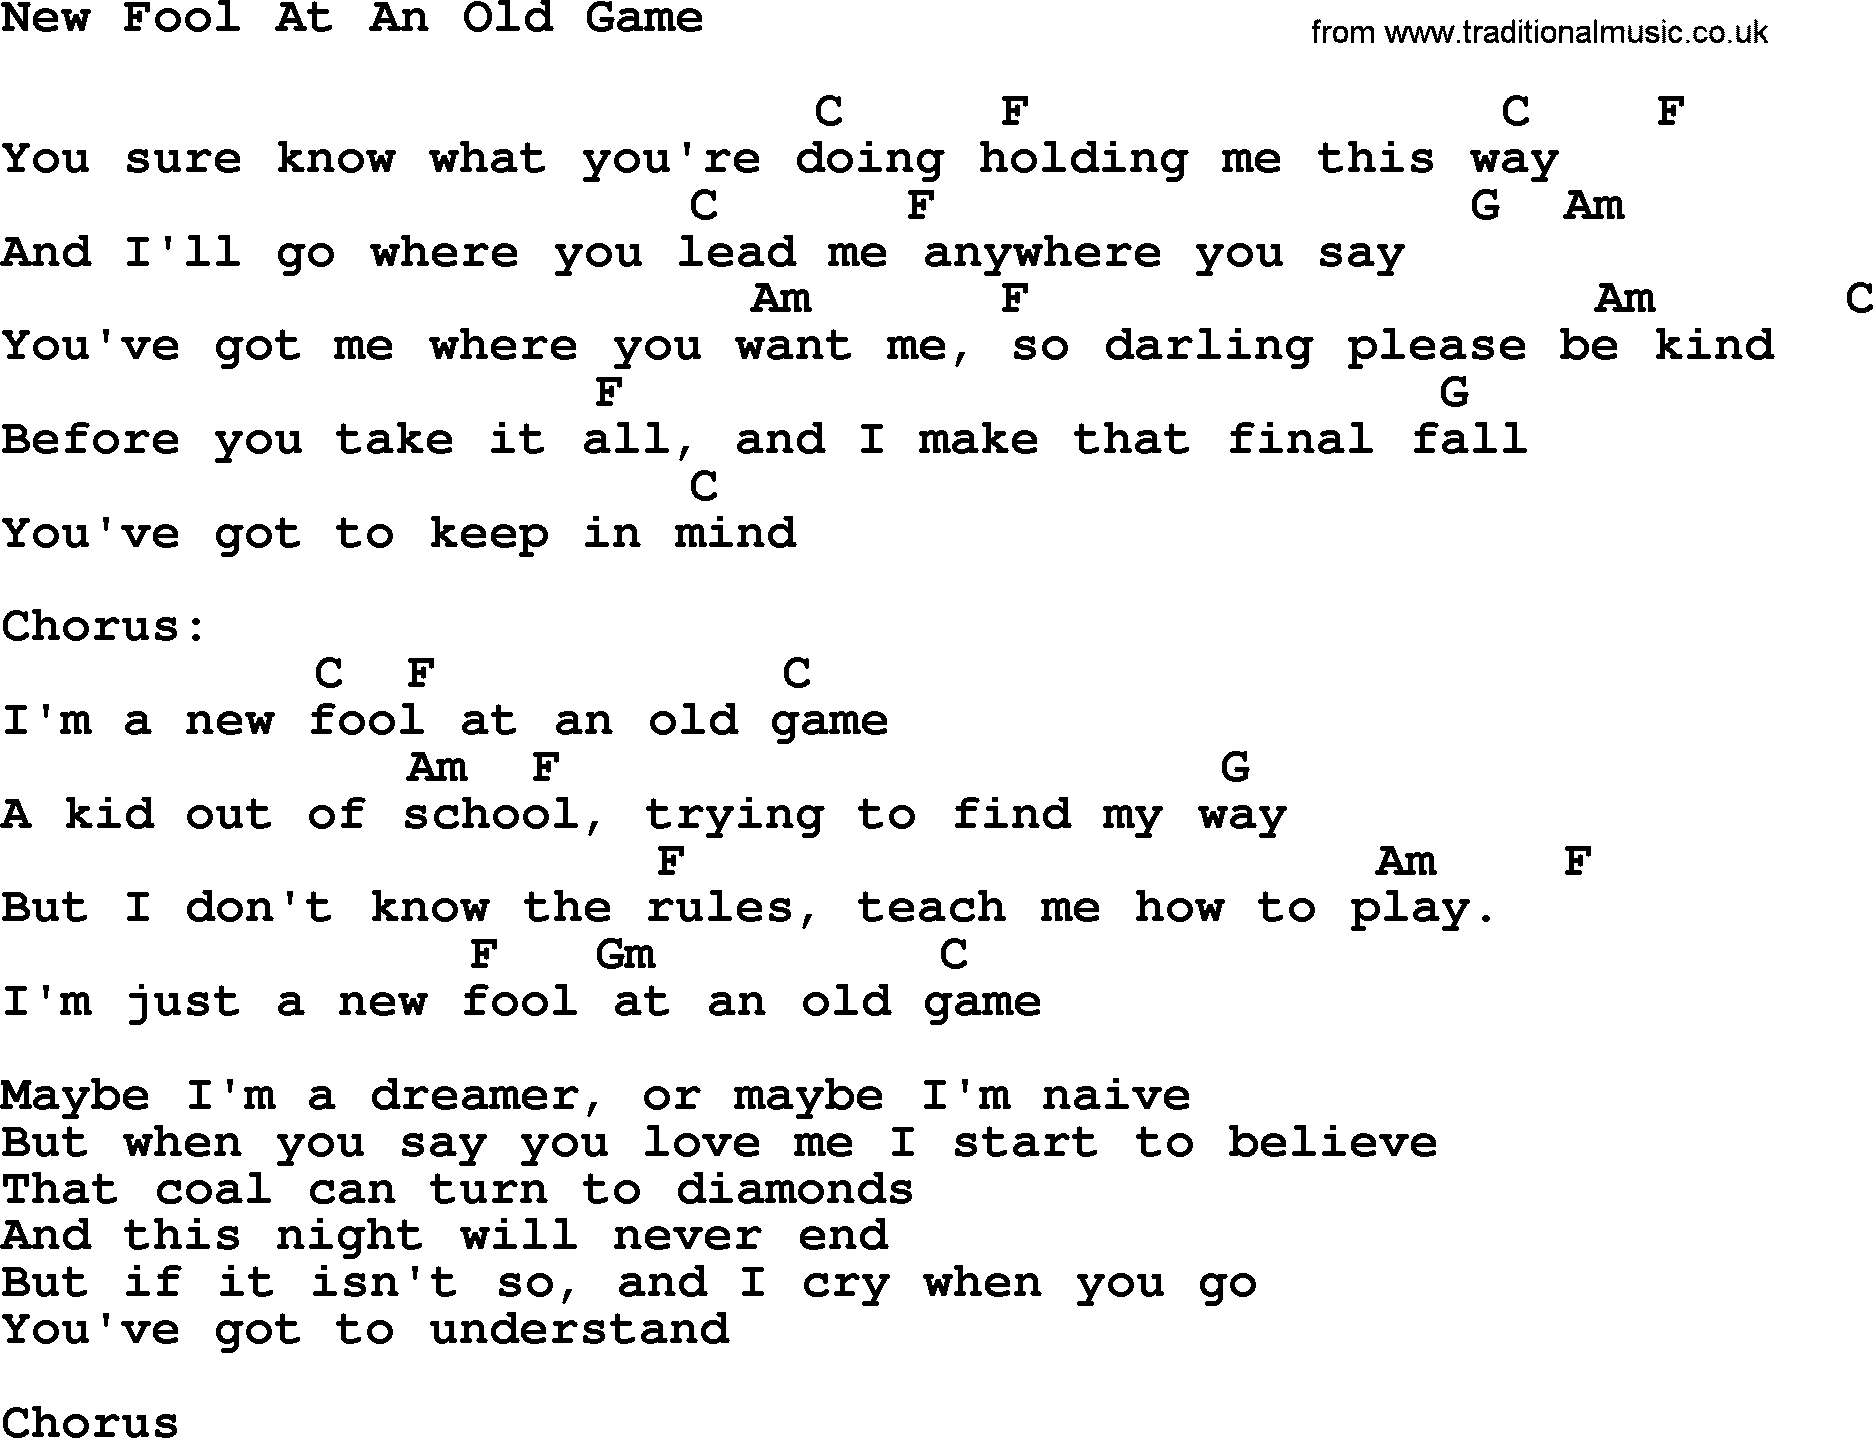 Reba McEntire song: New Fool At An Old Game, lyrics and chords